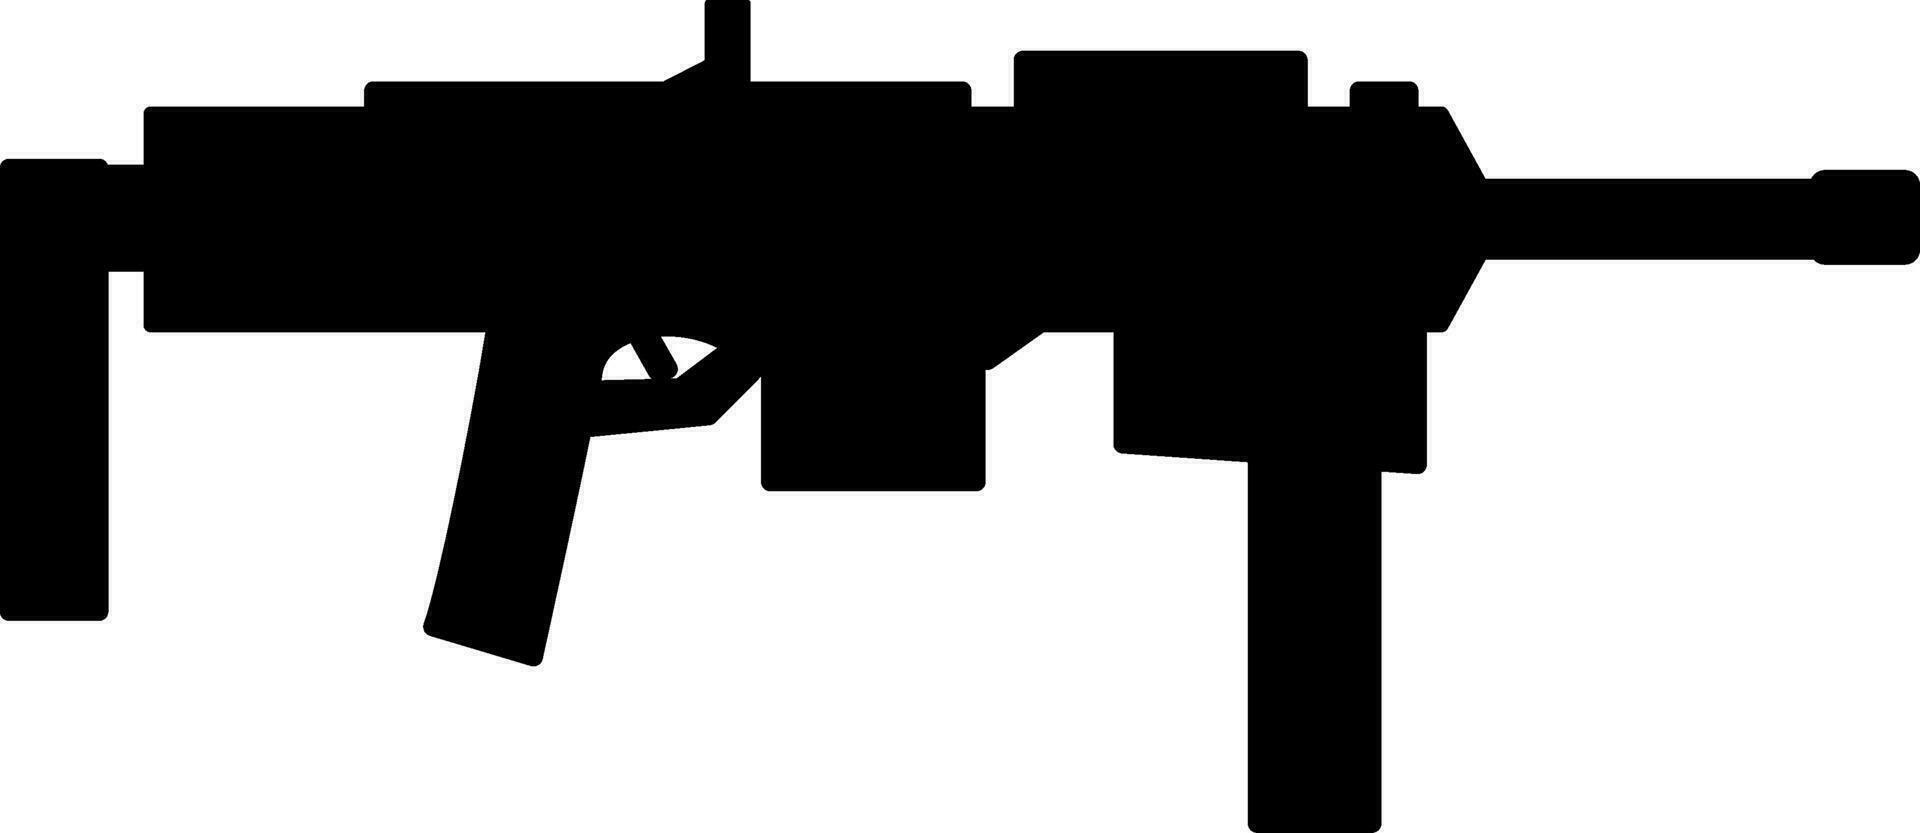 Submachine gun icon vector illustration. Sub machine gun silhouette for icon, symbol or sign. Submachine gun symbol for design about gun, weapon, armament, military, war, battlefield and army